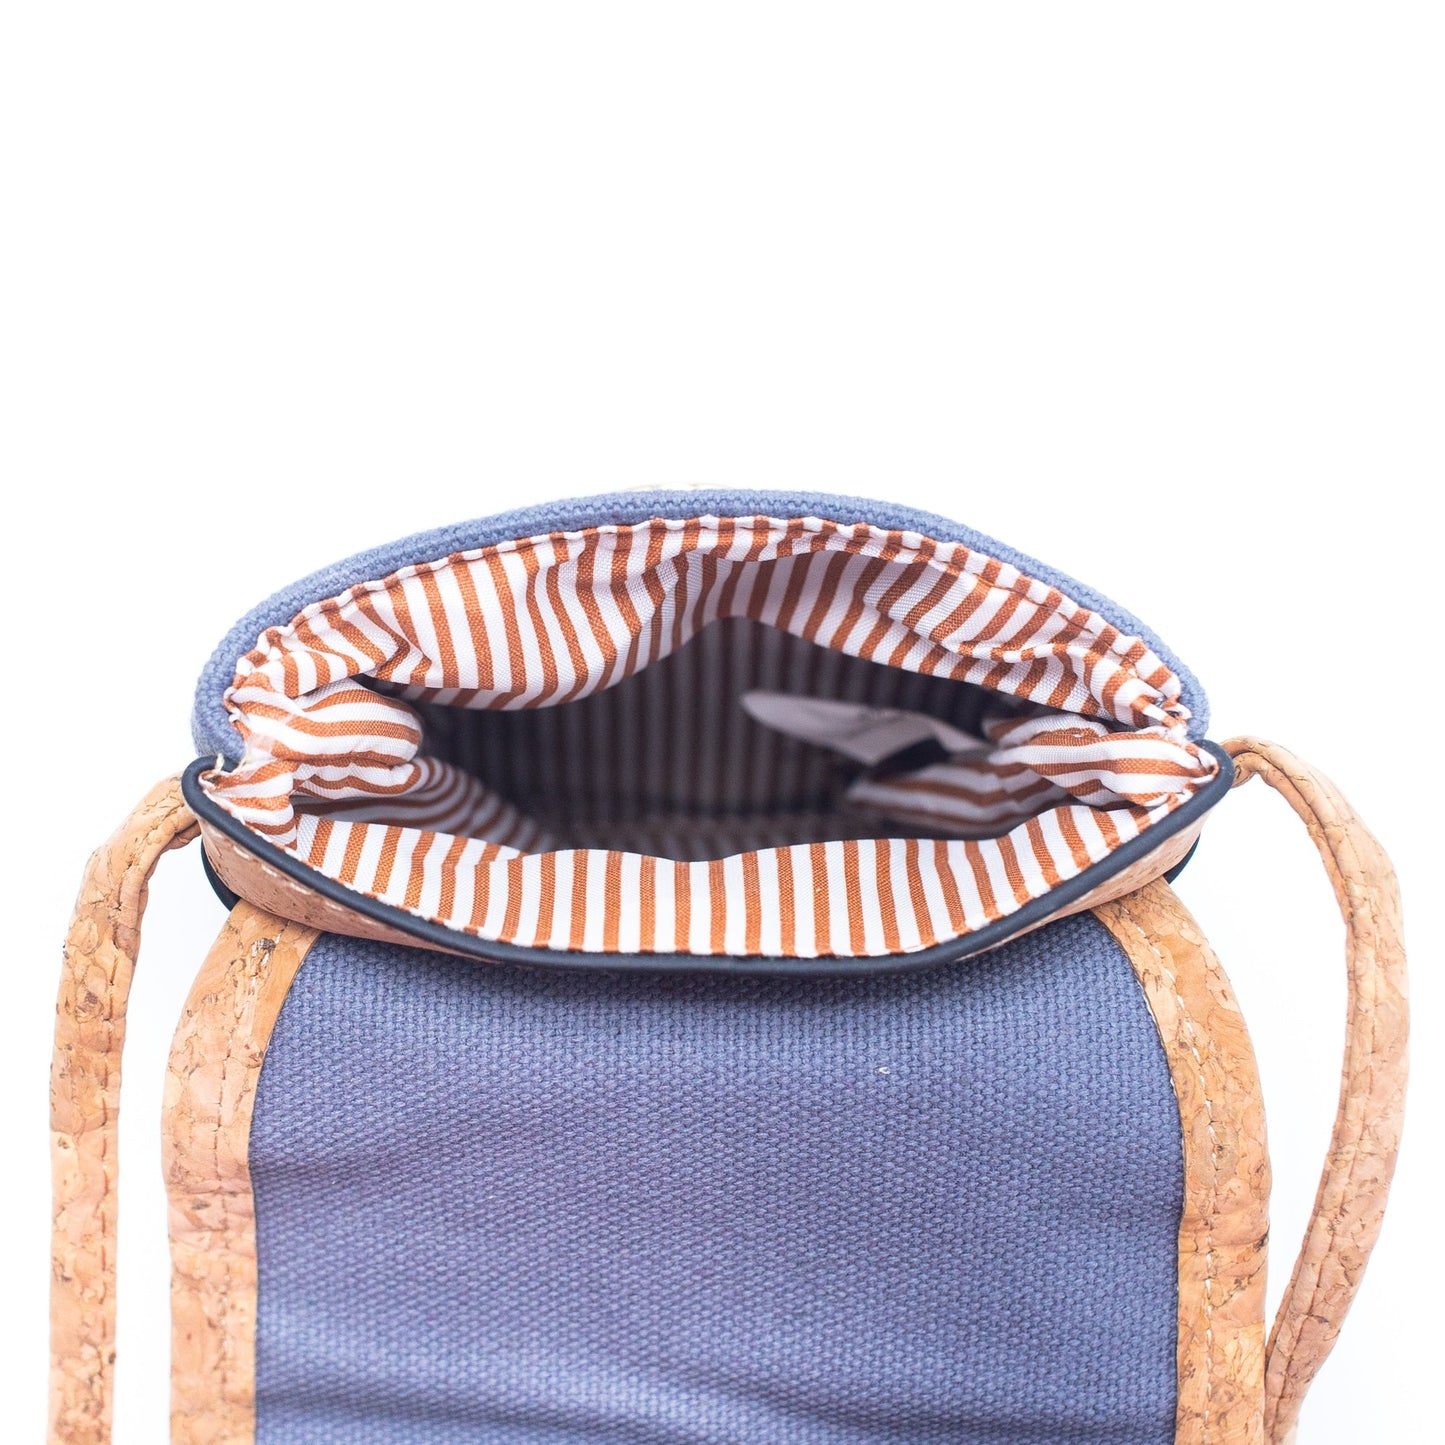 Elle Cork & Canvas Mobile Sling Bag | THE CORK COLLECTION